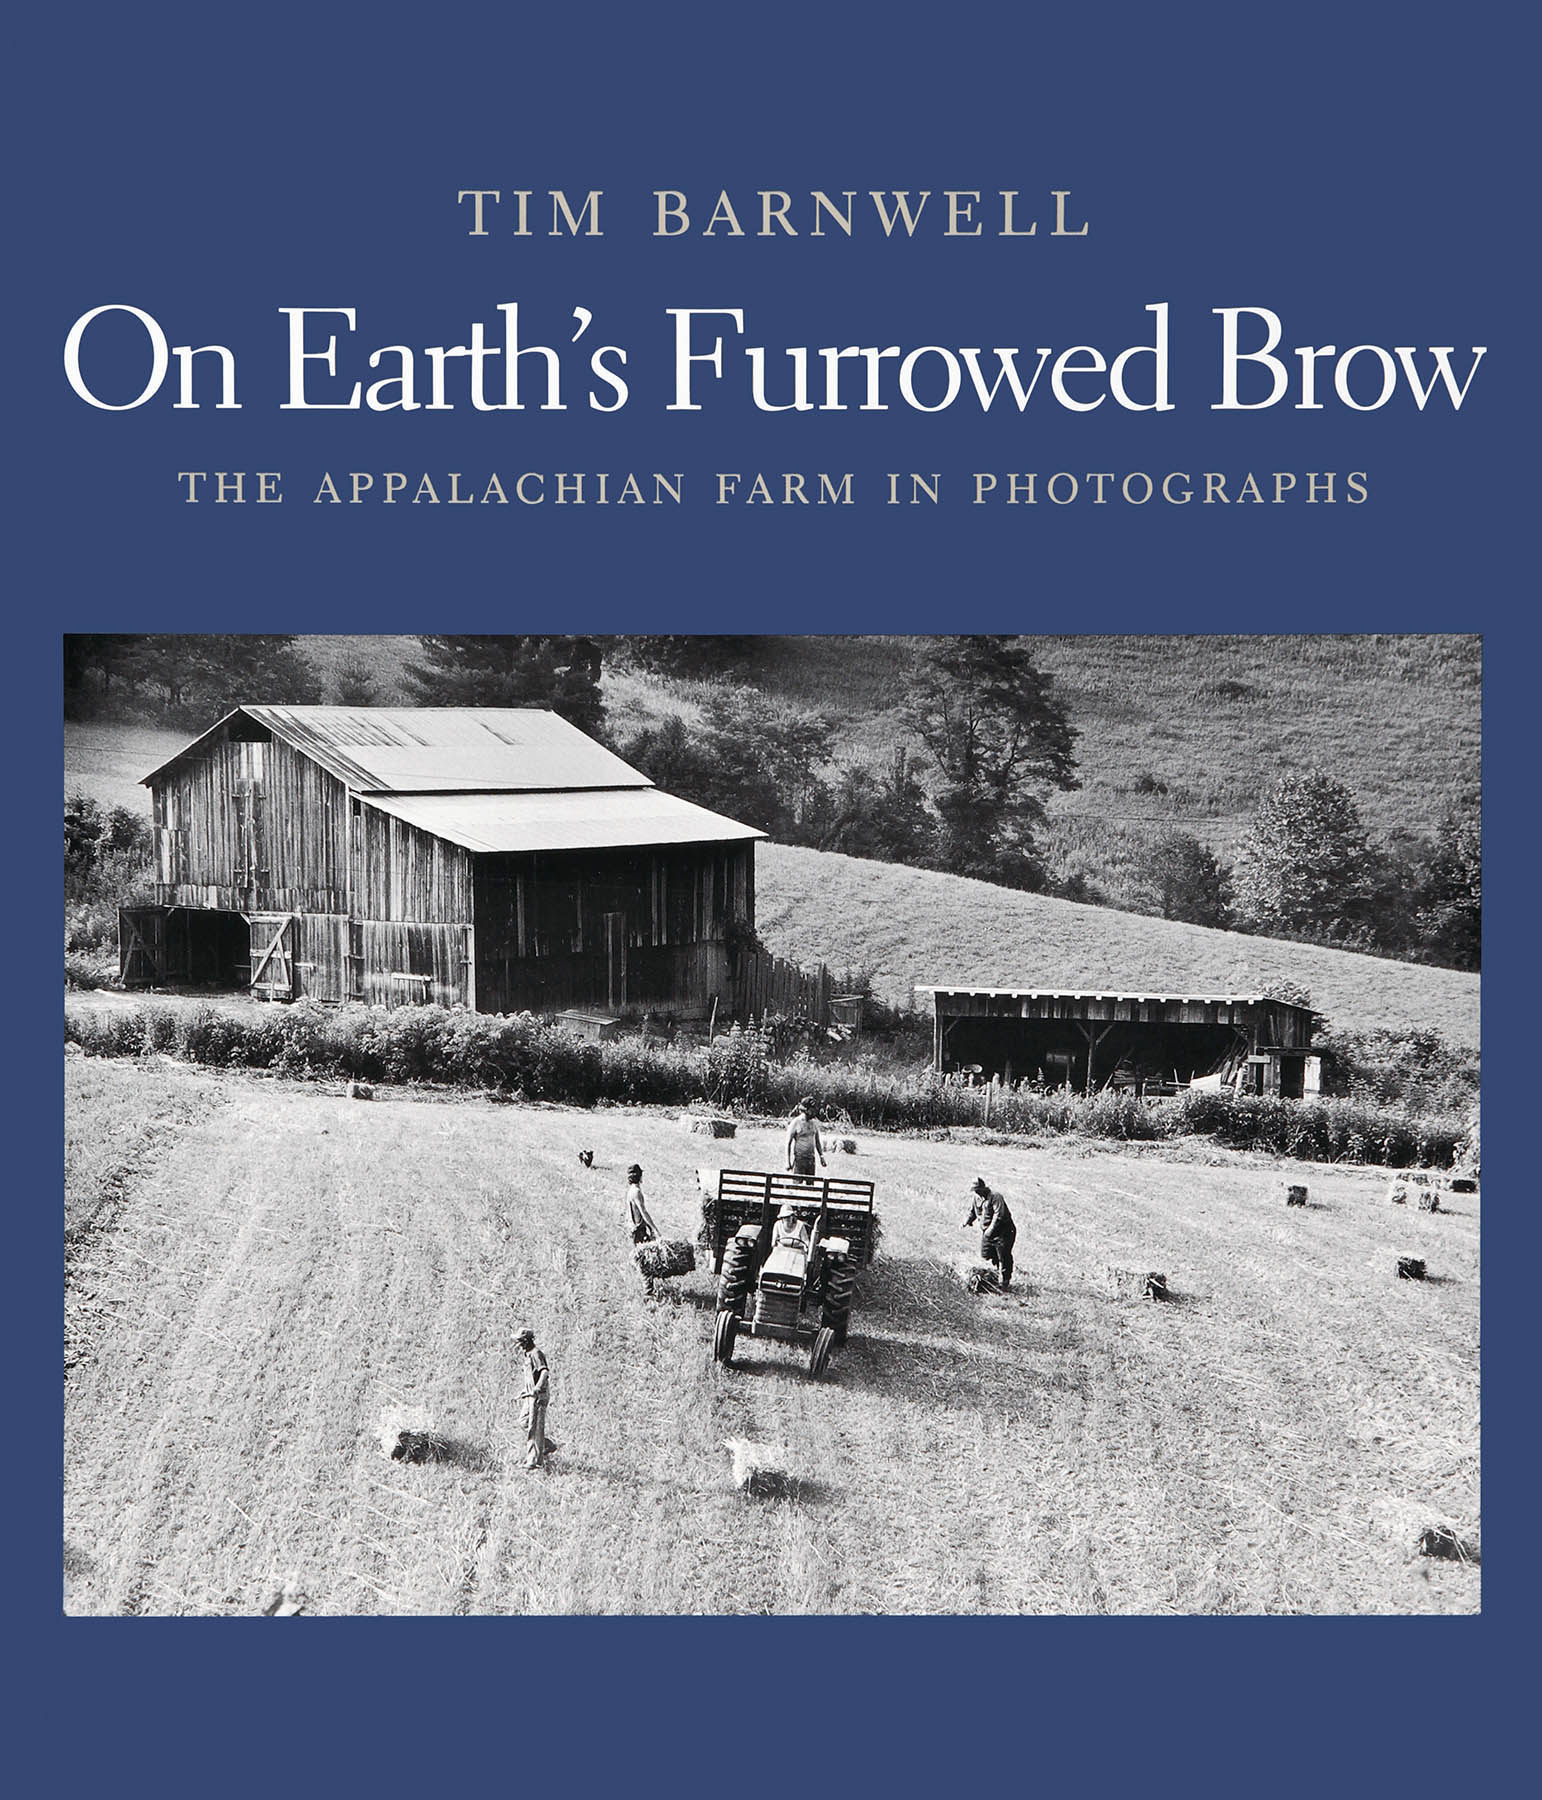 Copy of On Earth's Furrowed Brow Appalchian Farm in Photographs